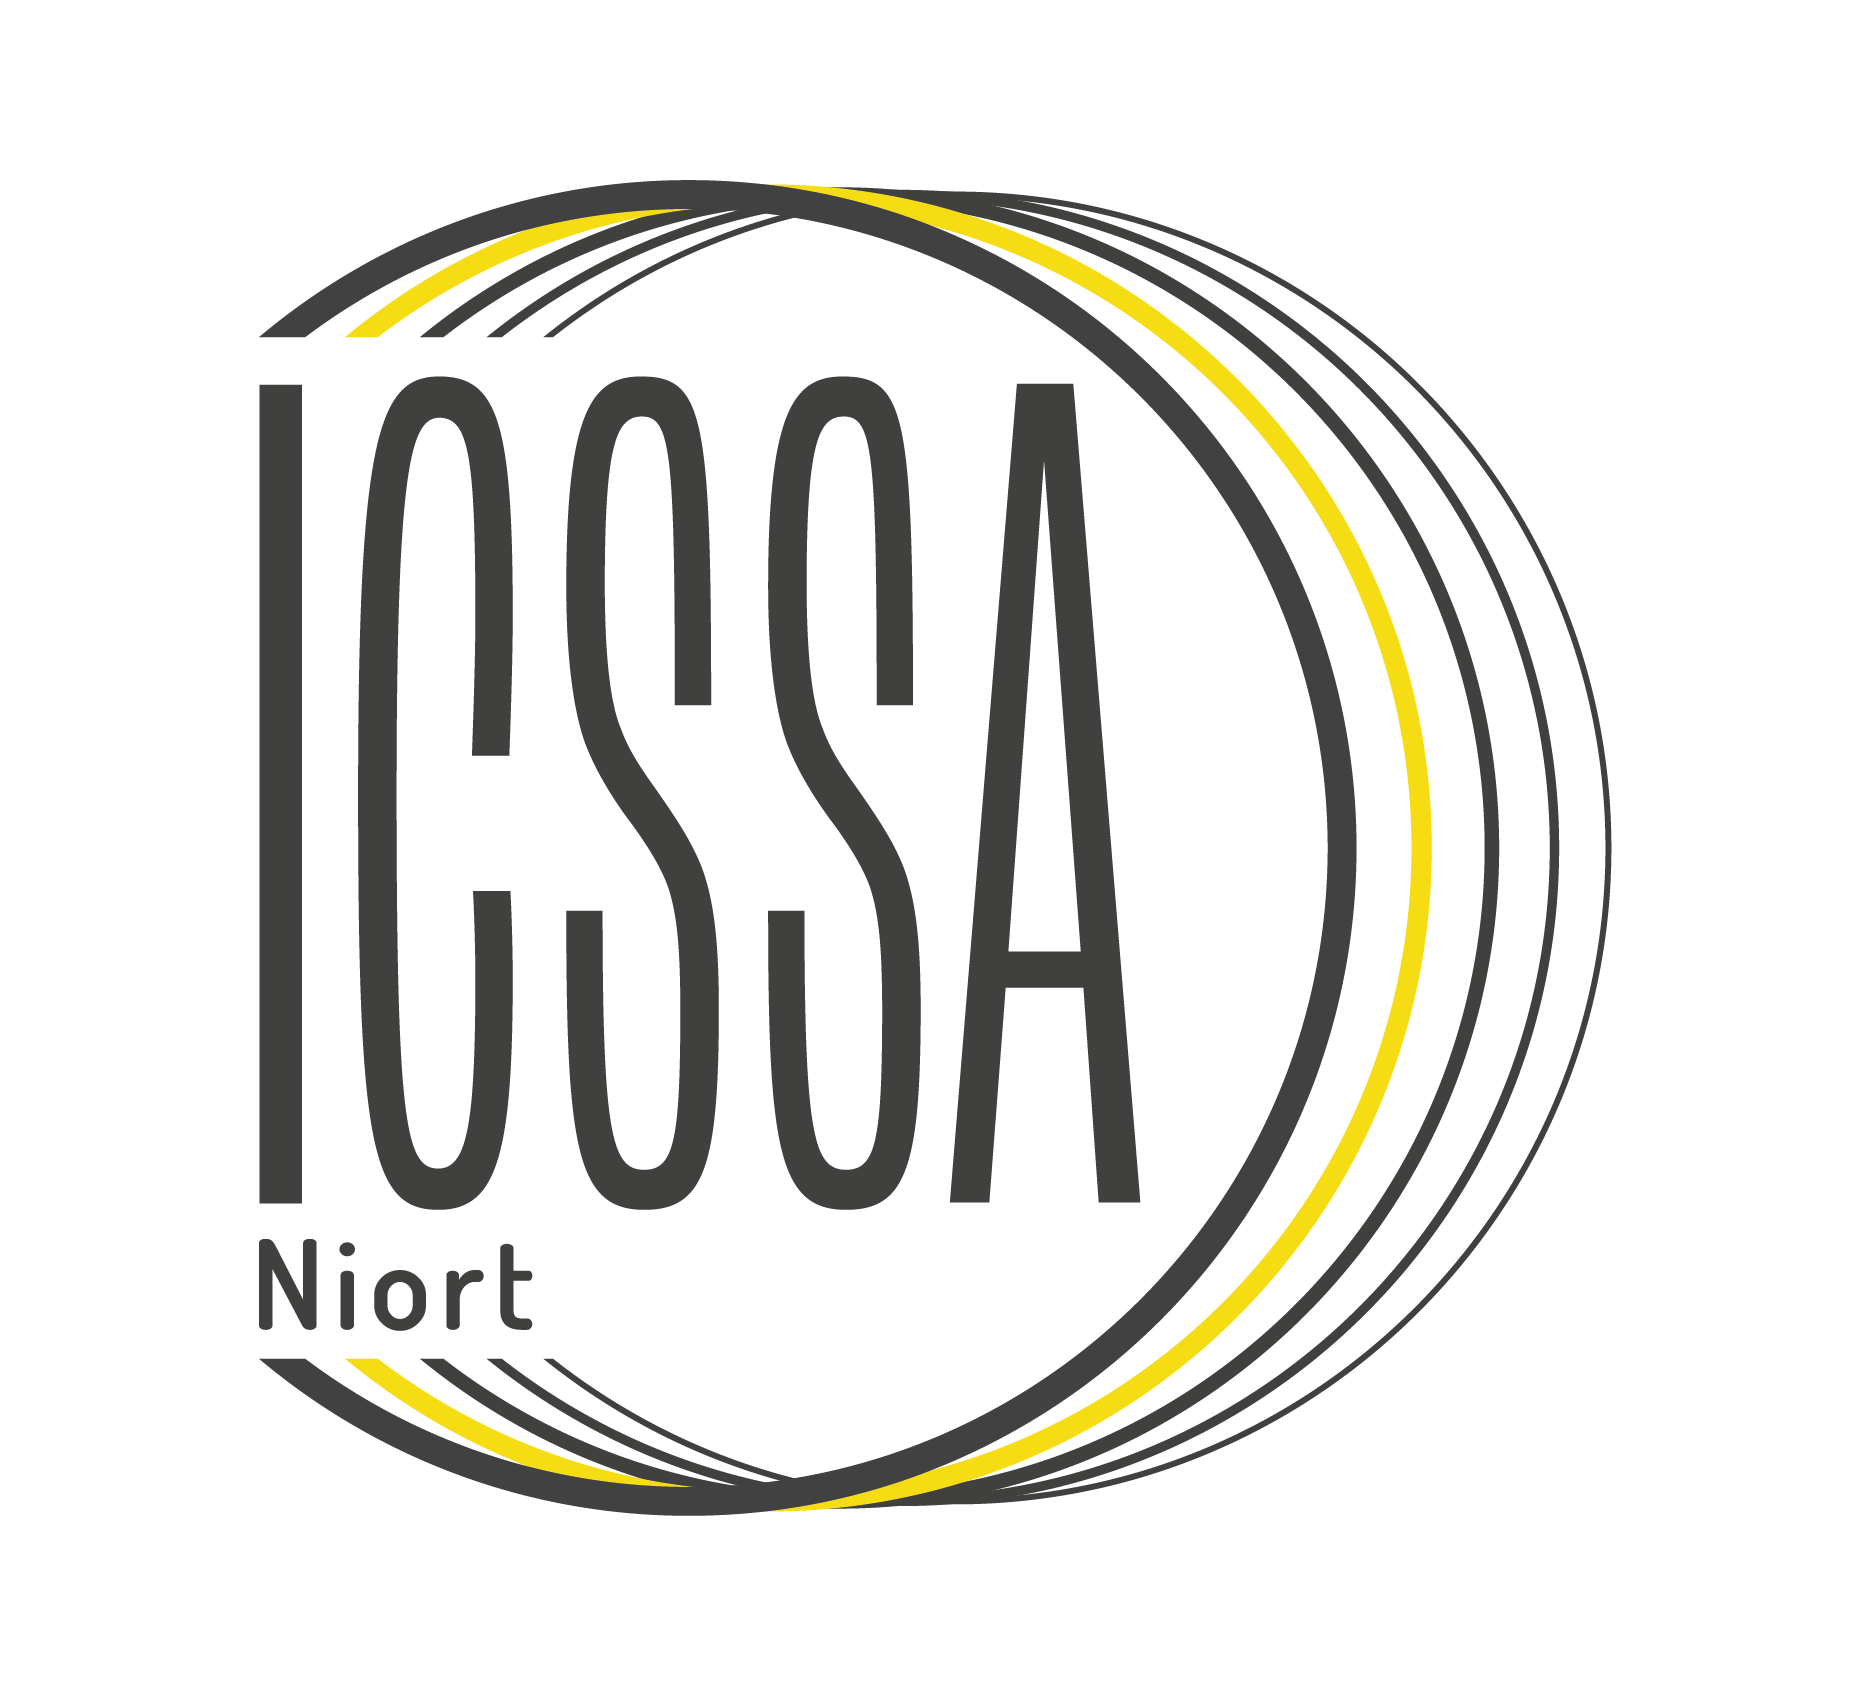 ICSSA Niort